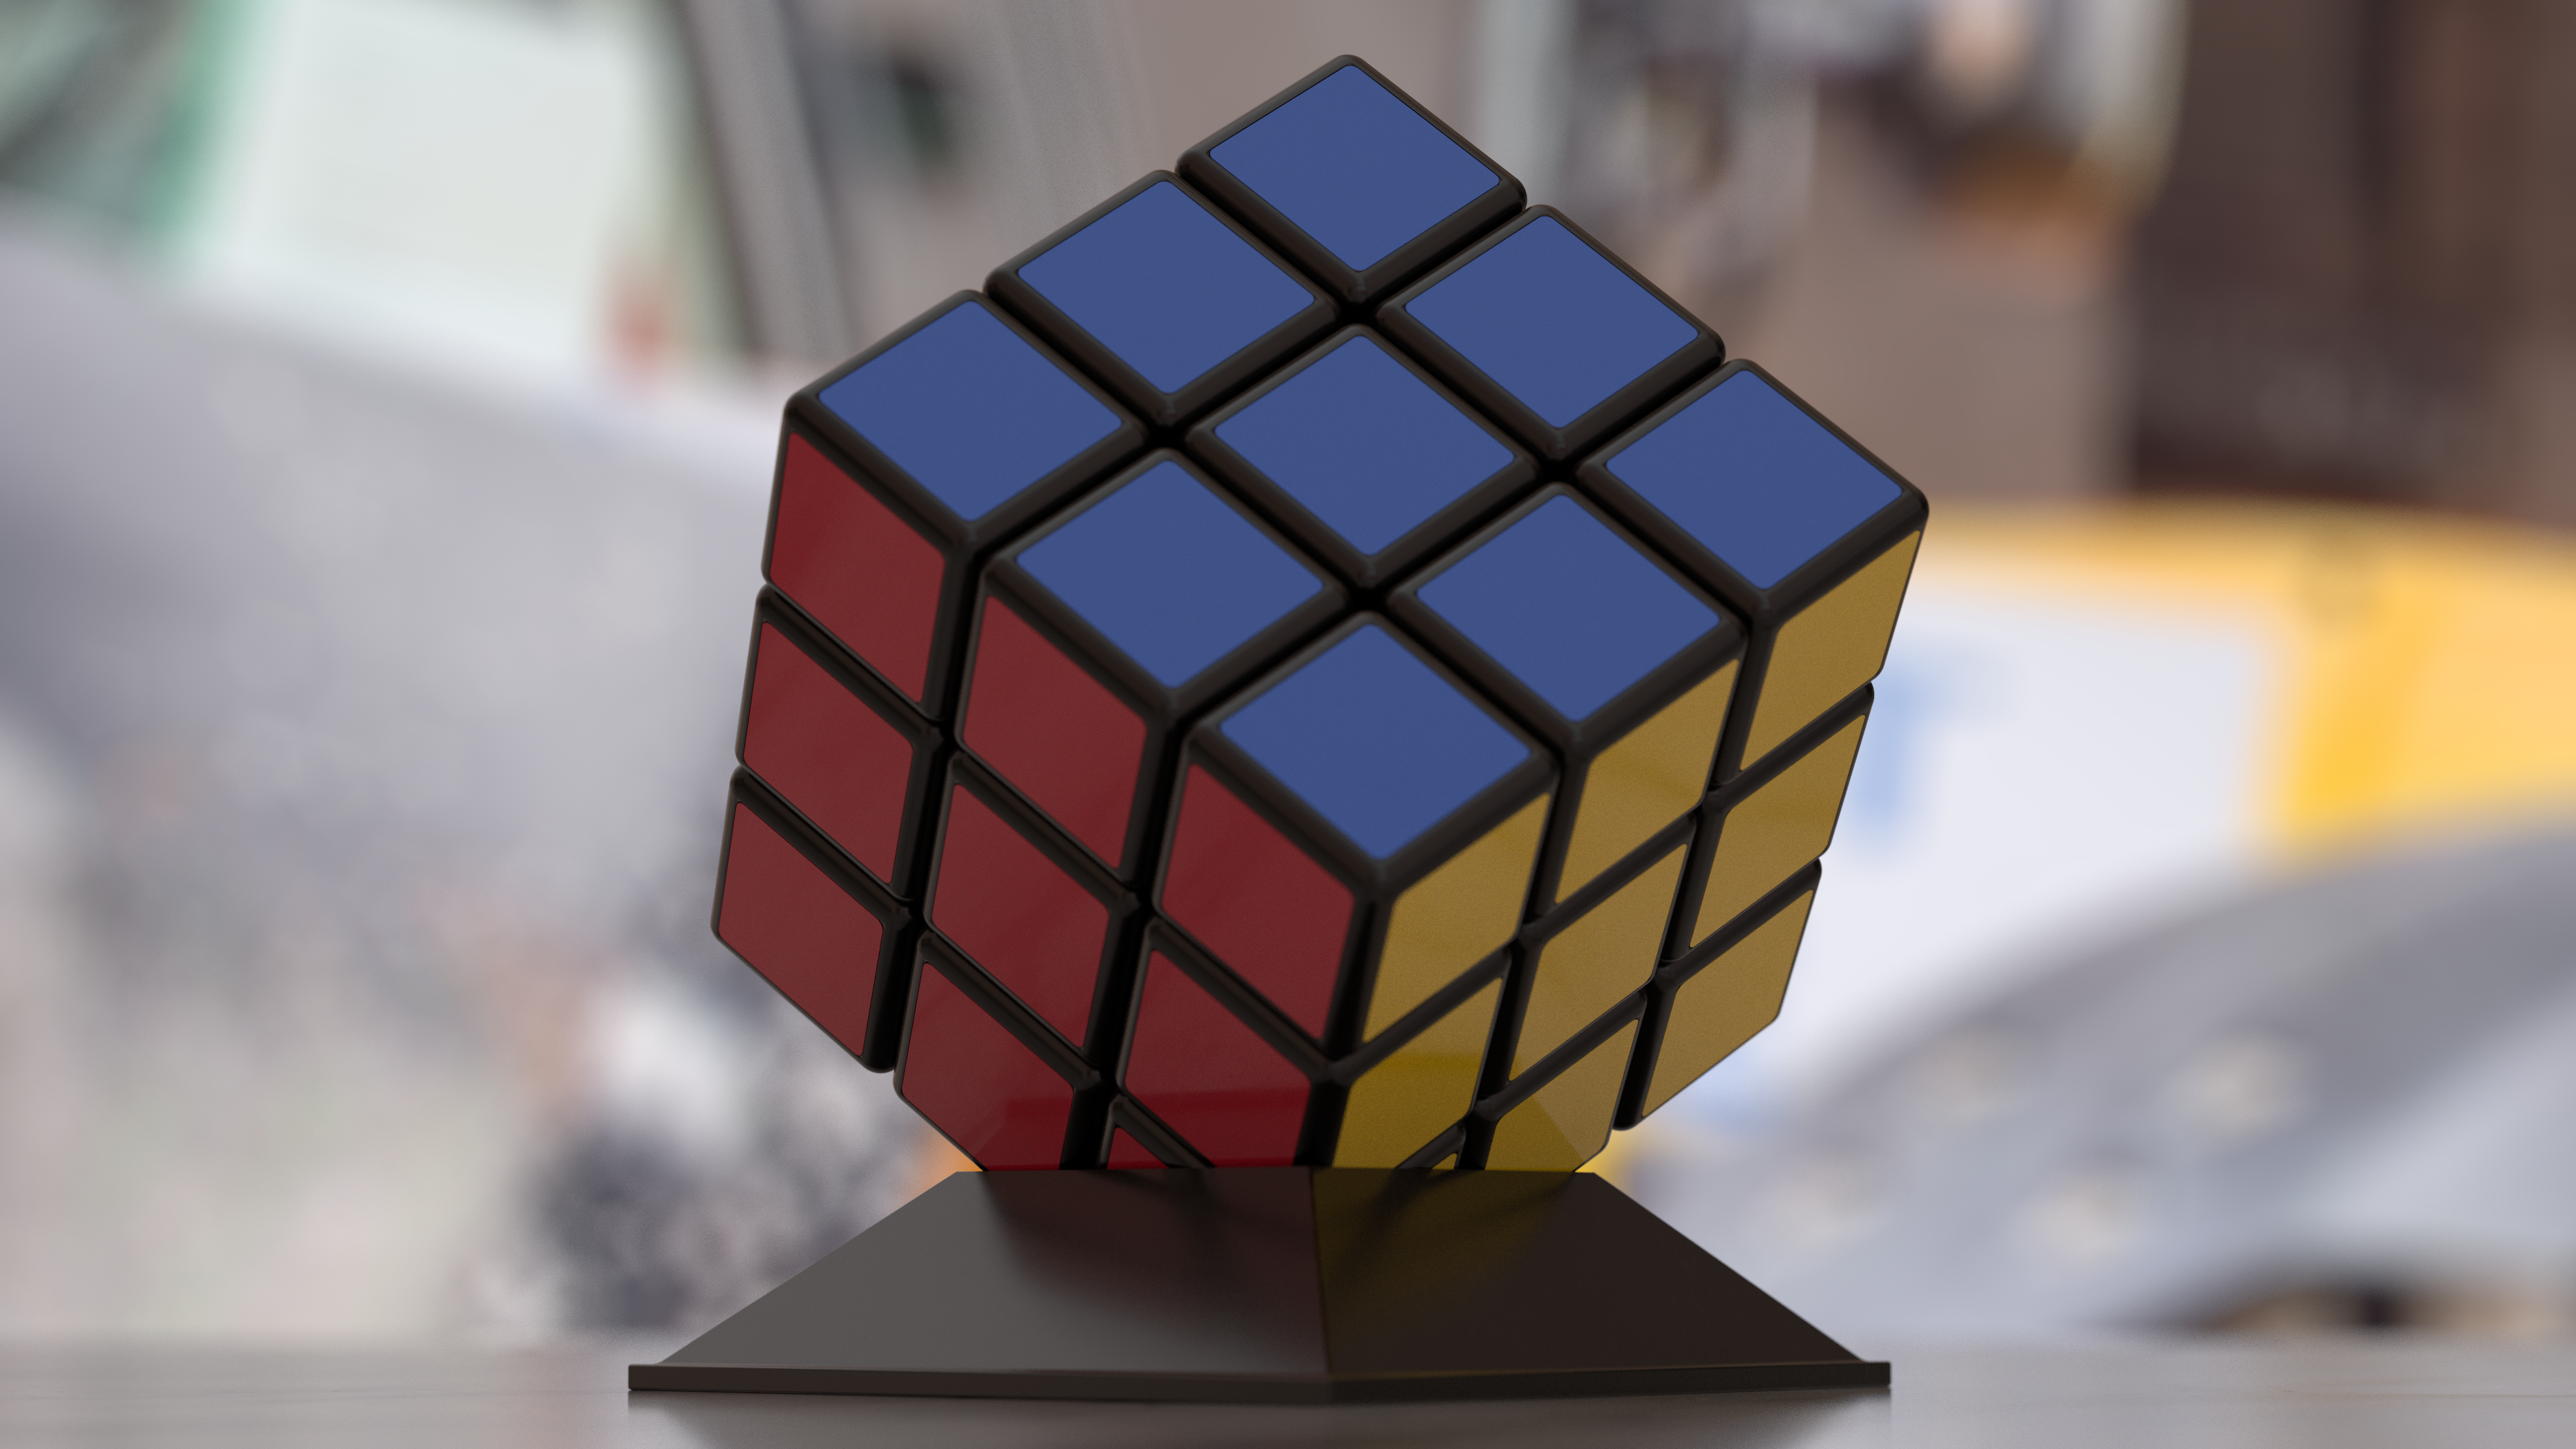 Rubik’s Cube Animation